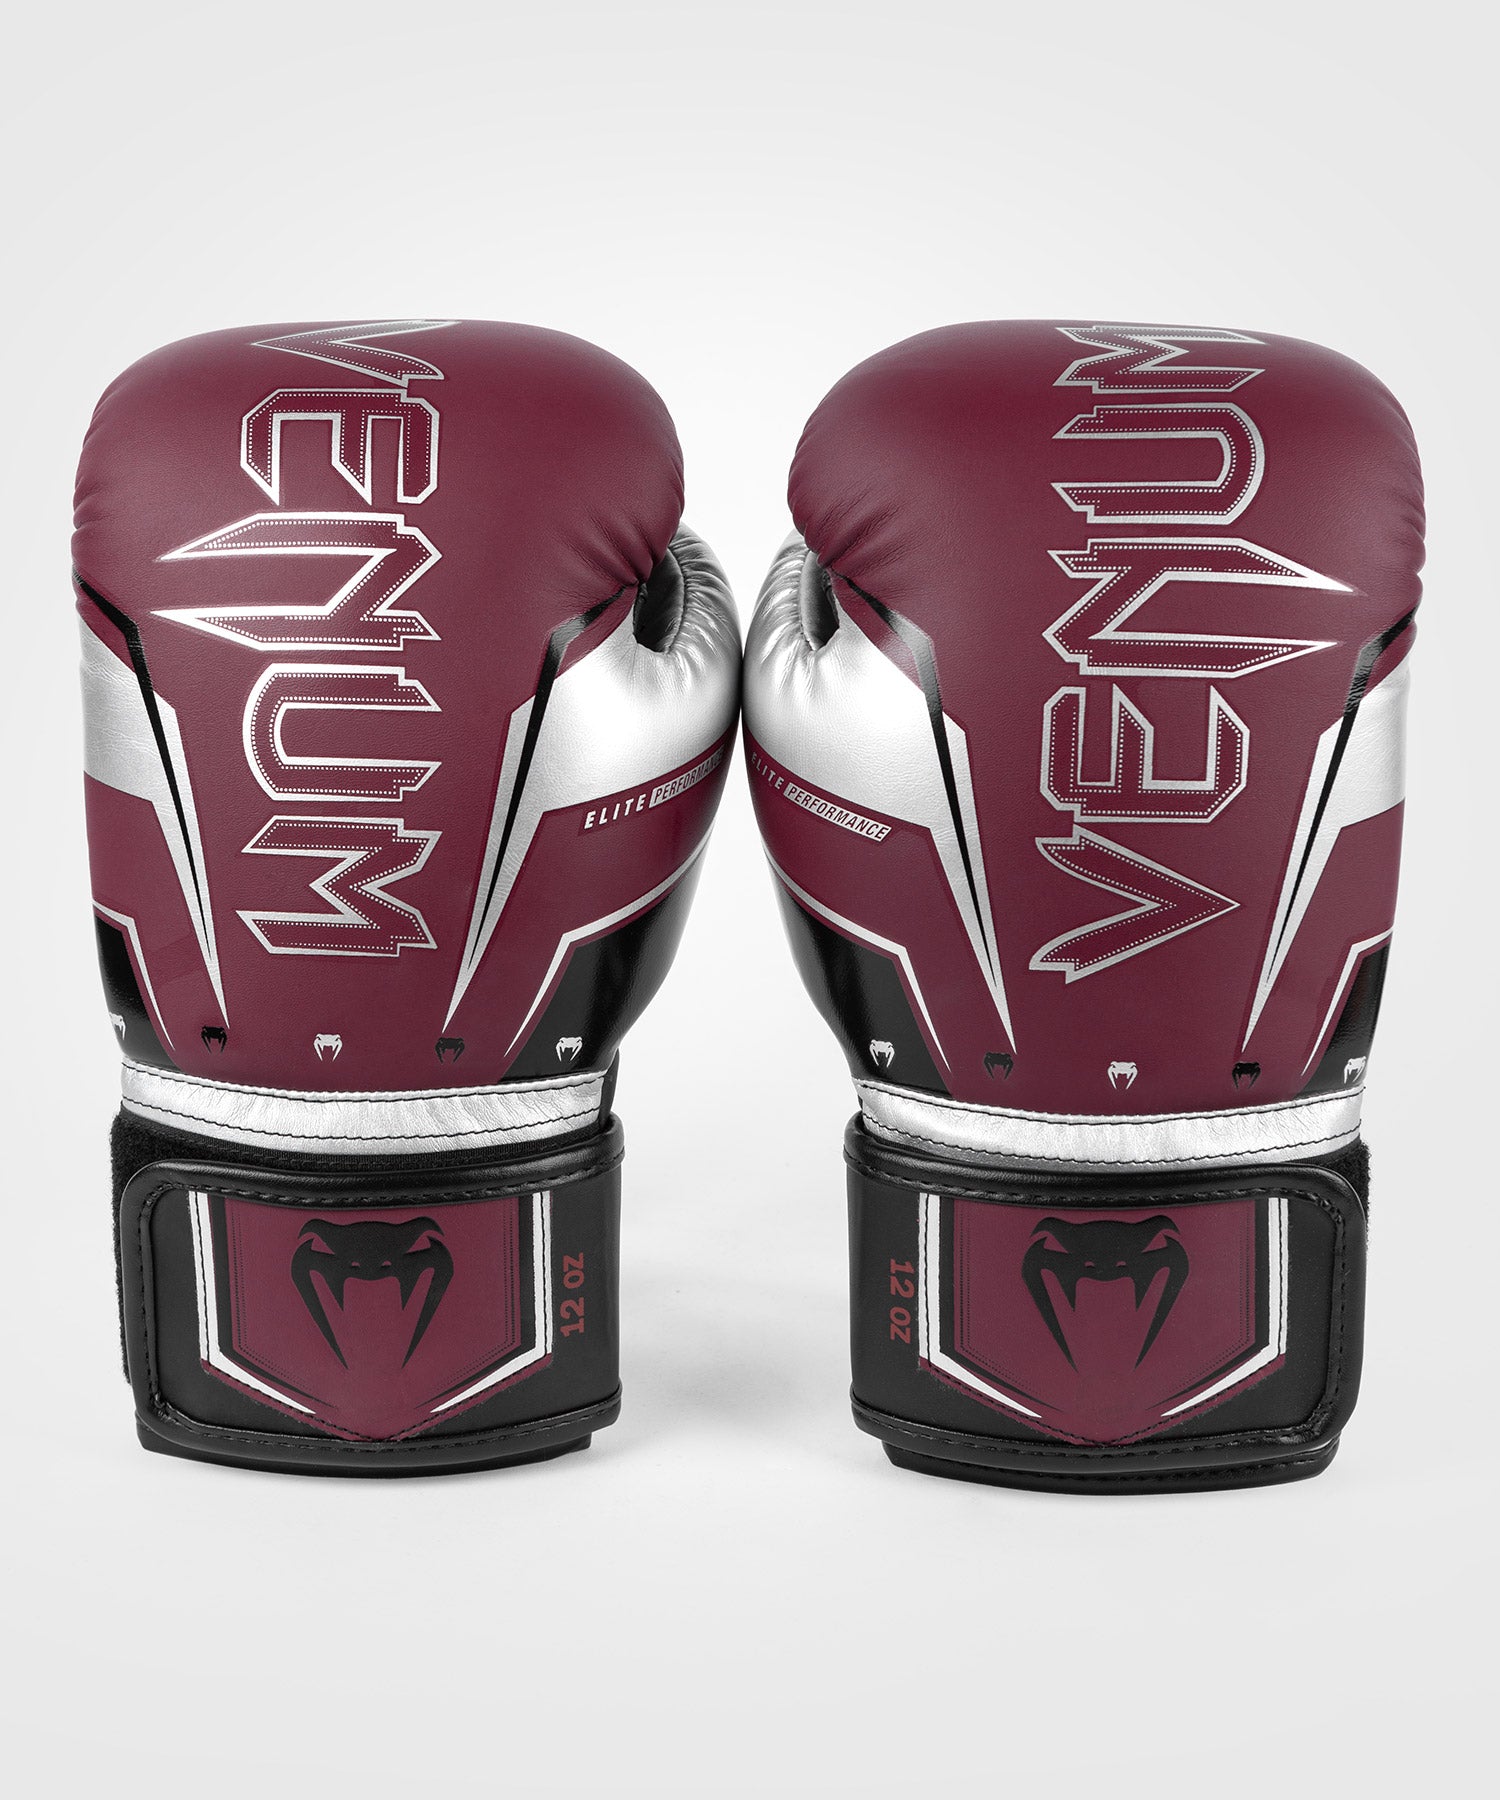 Venum Boxing Gloves ELITE  Kickboxing Gloves - FIGHTWEAR SHOP EUROPE